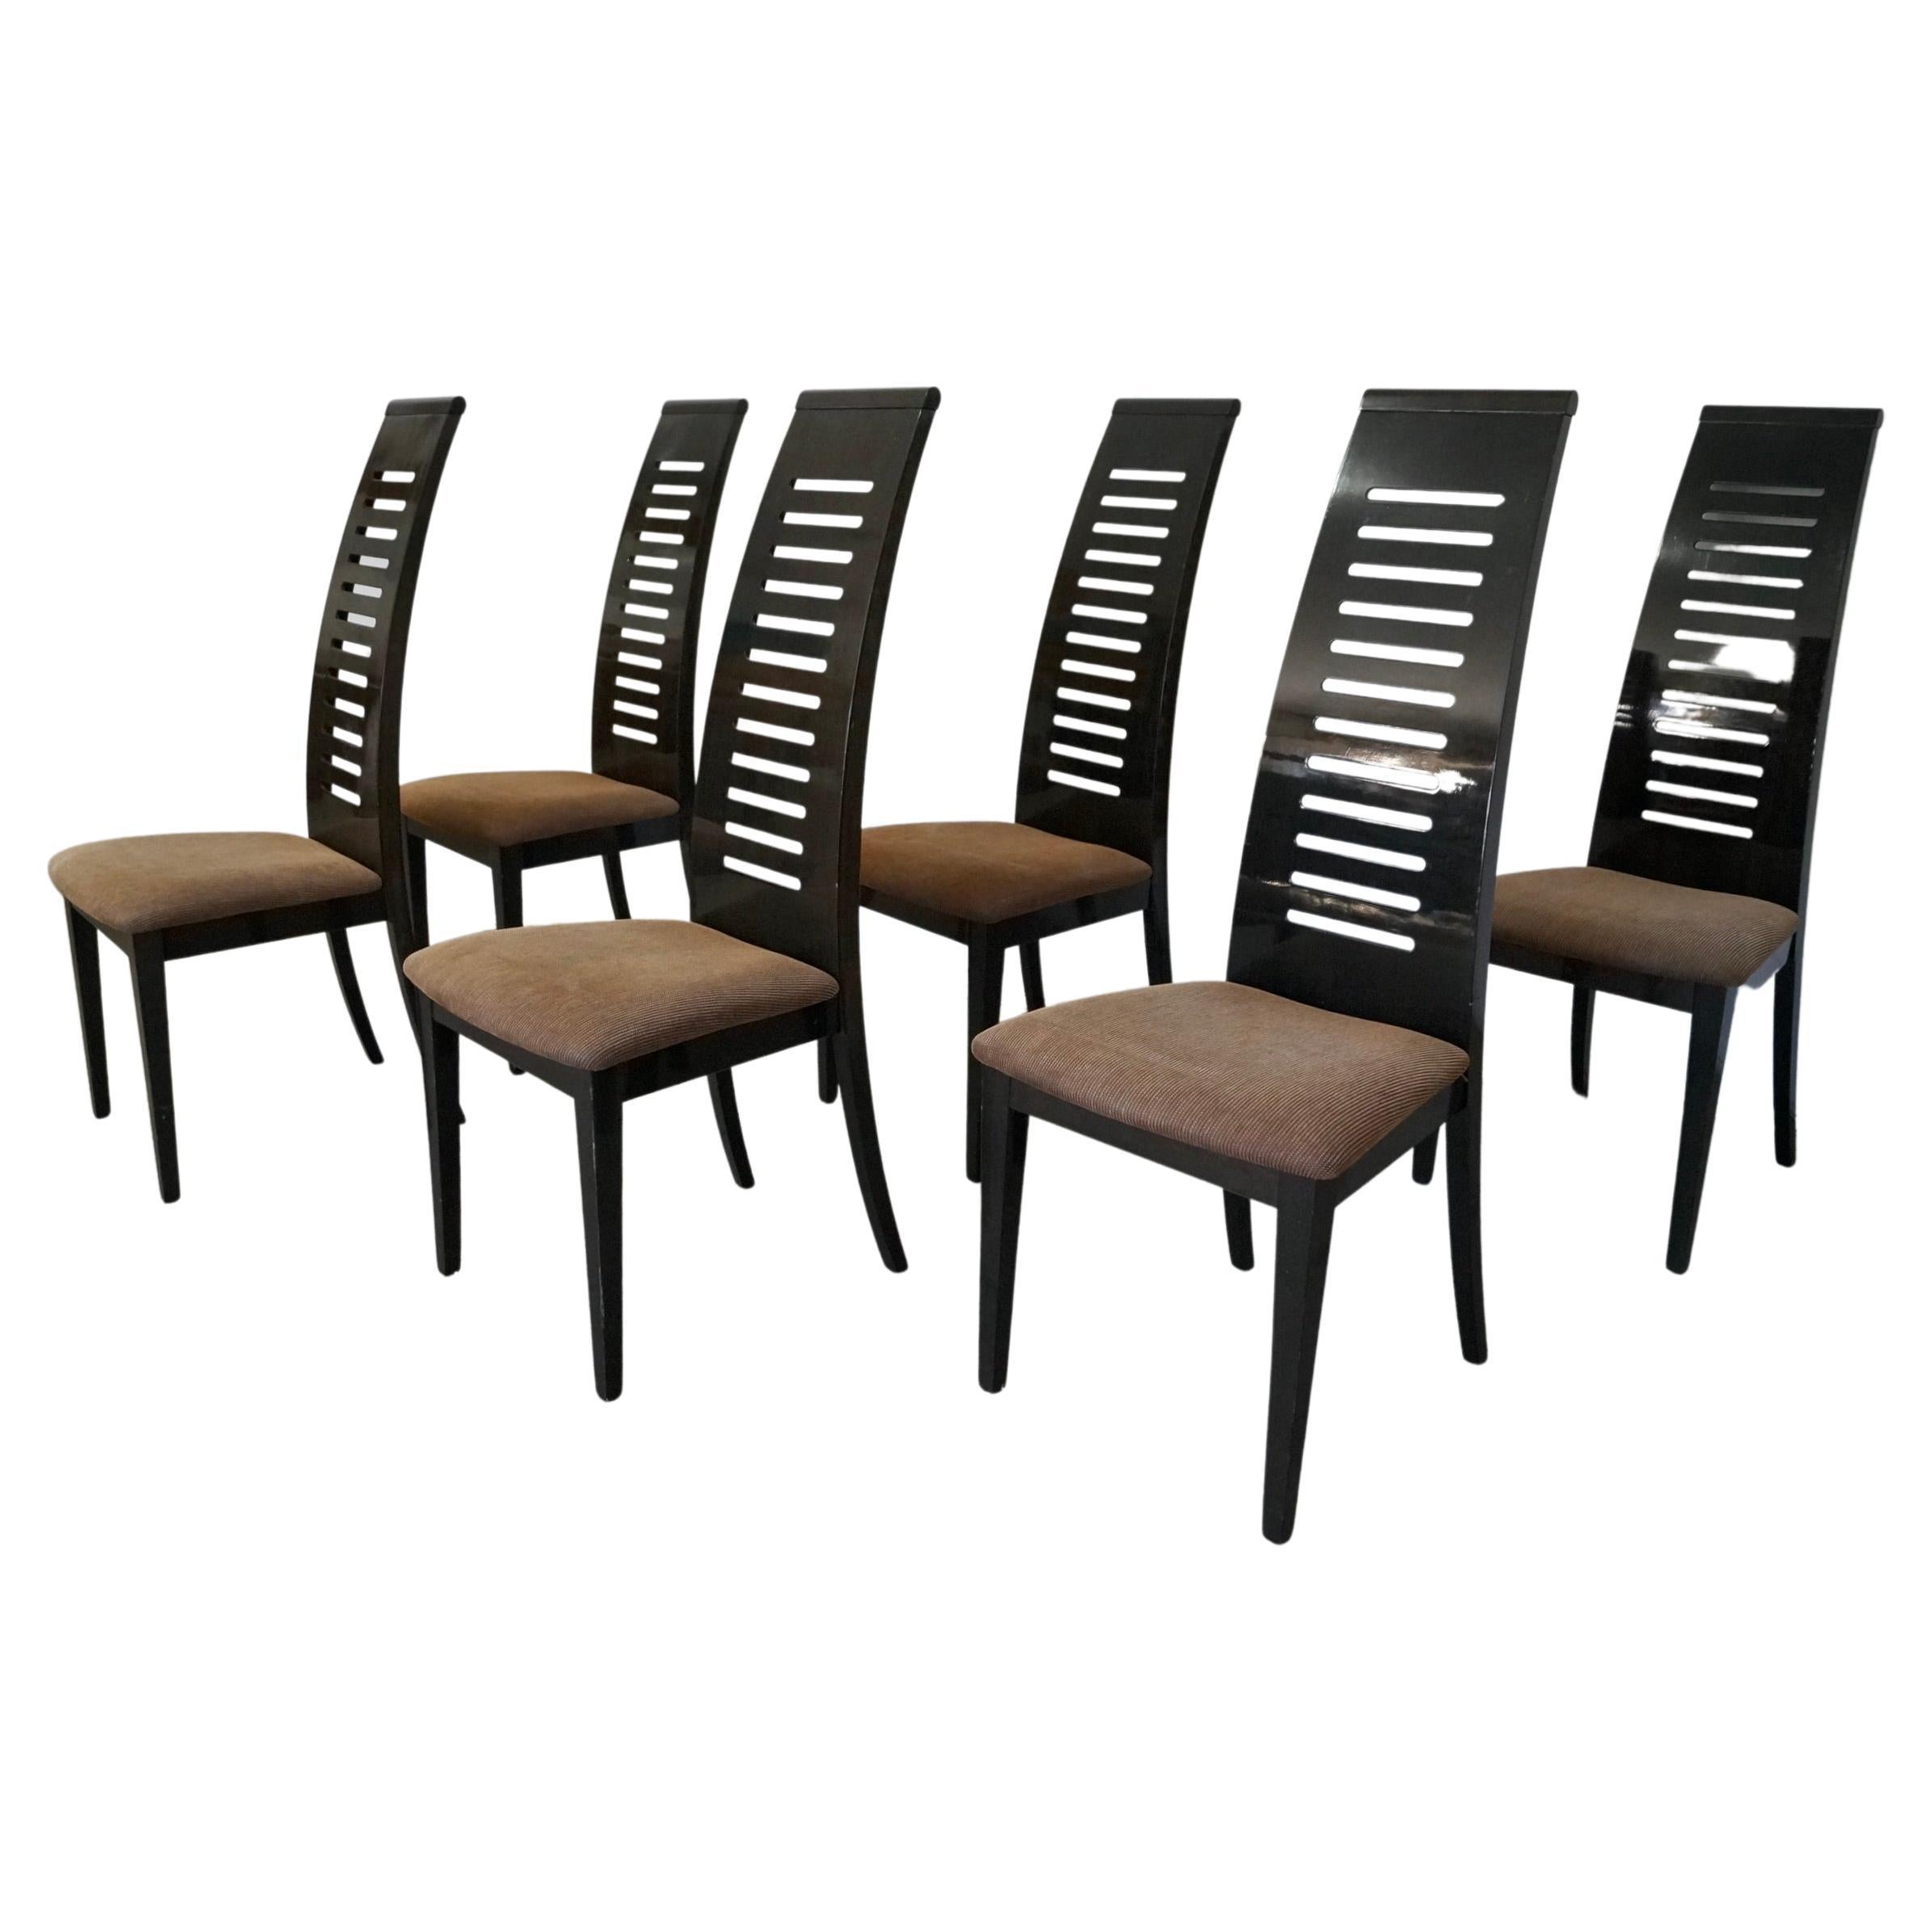 Postmodern Ello Furniture Pietro Costantini Dining Chairs - Set of 6